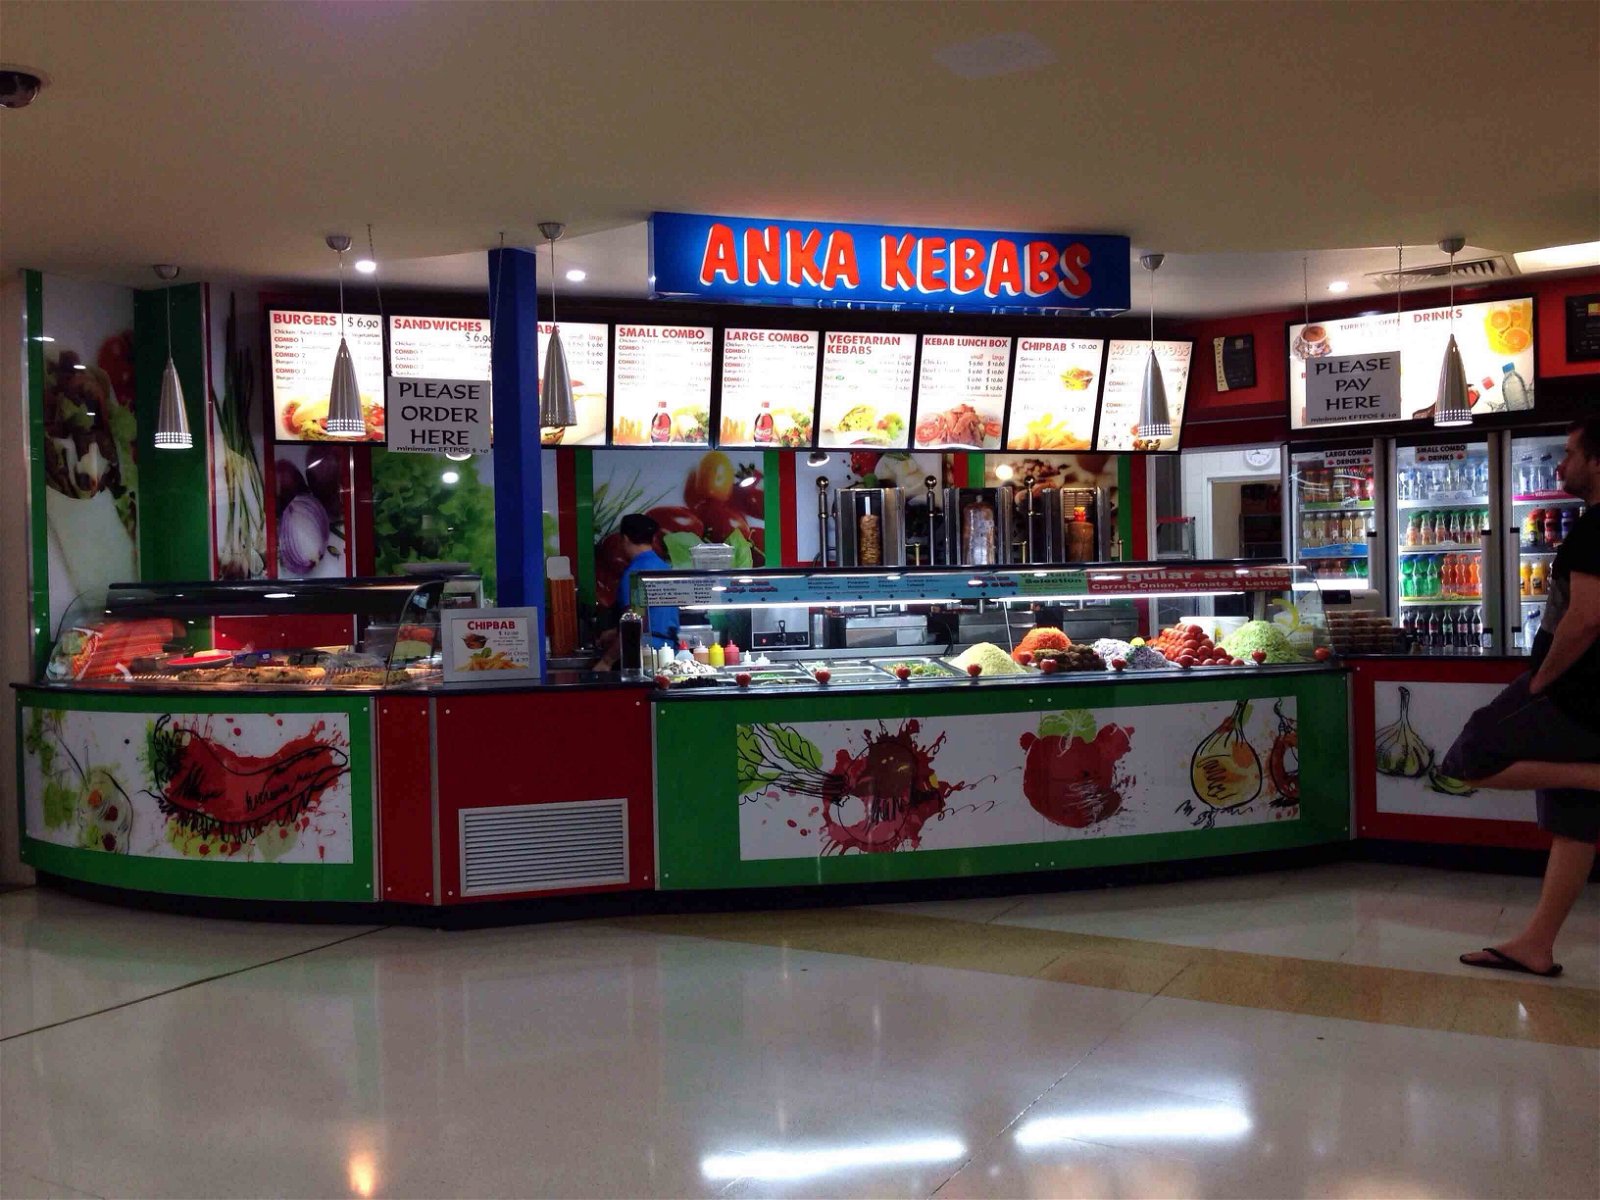 Anka Kebabs - Food Delivery Shop